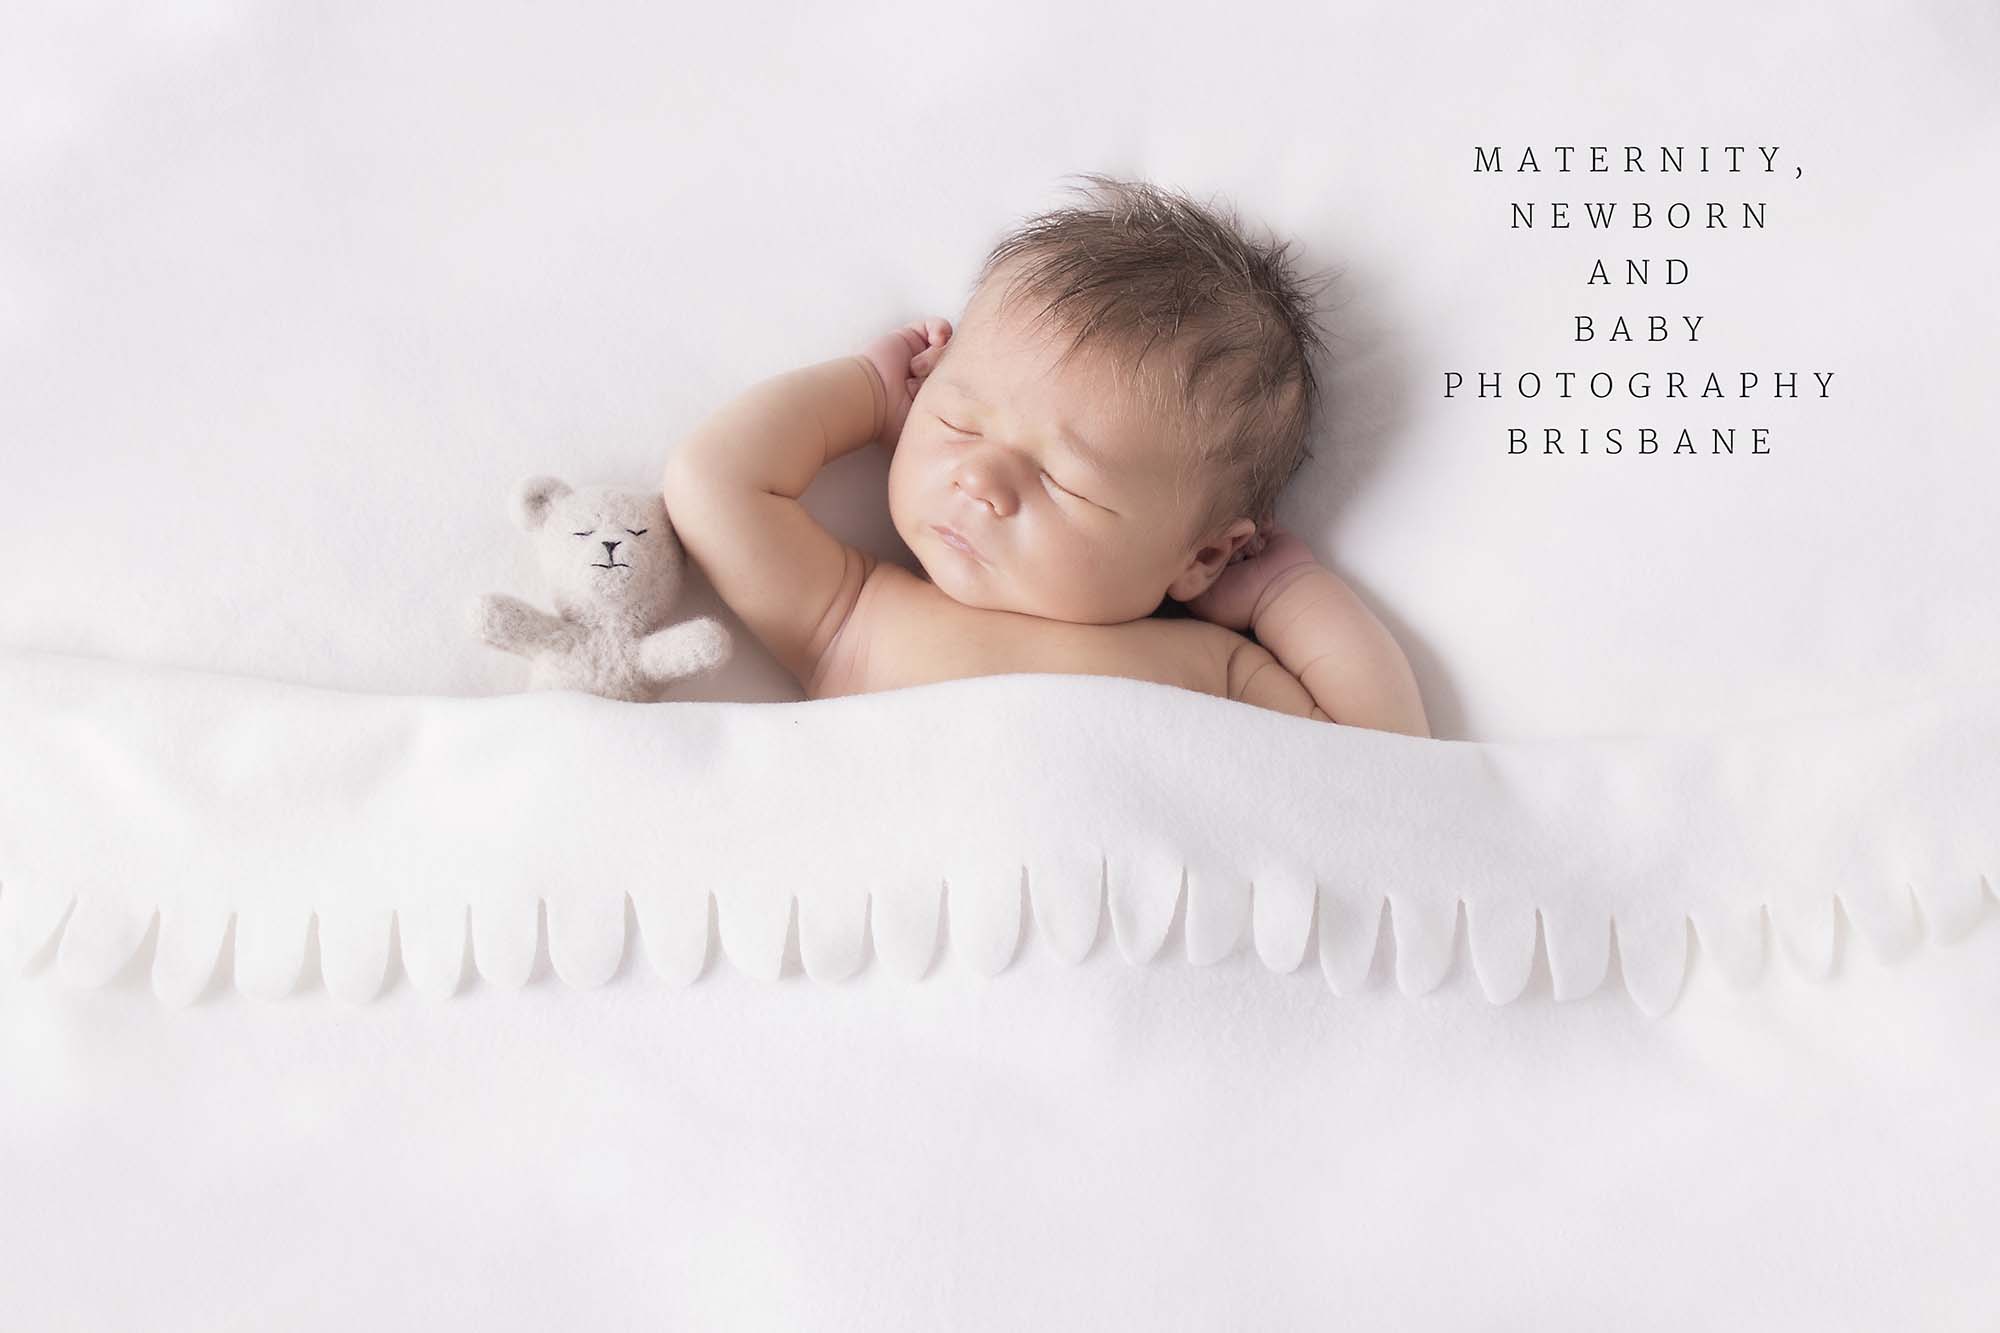 Maternity and Newborn photography Brisbane